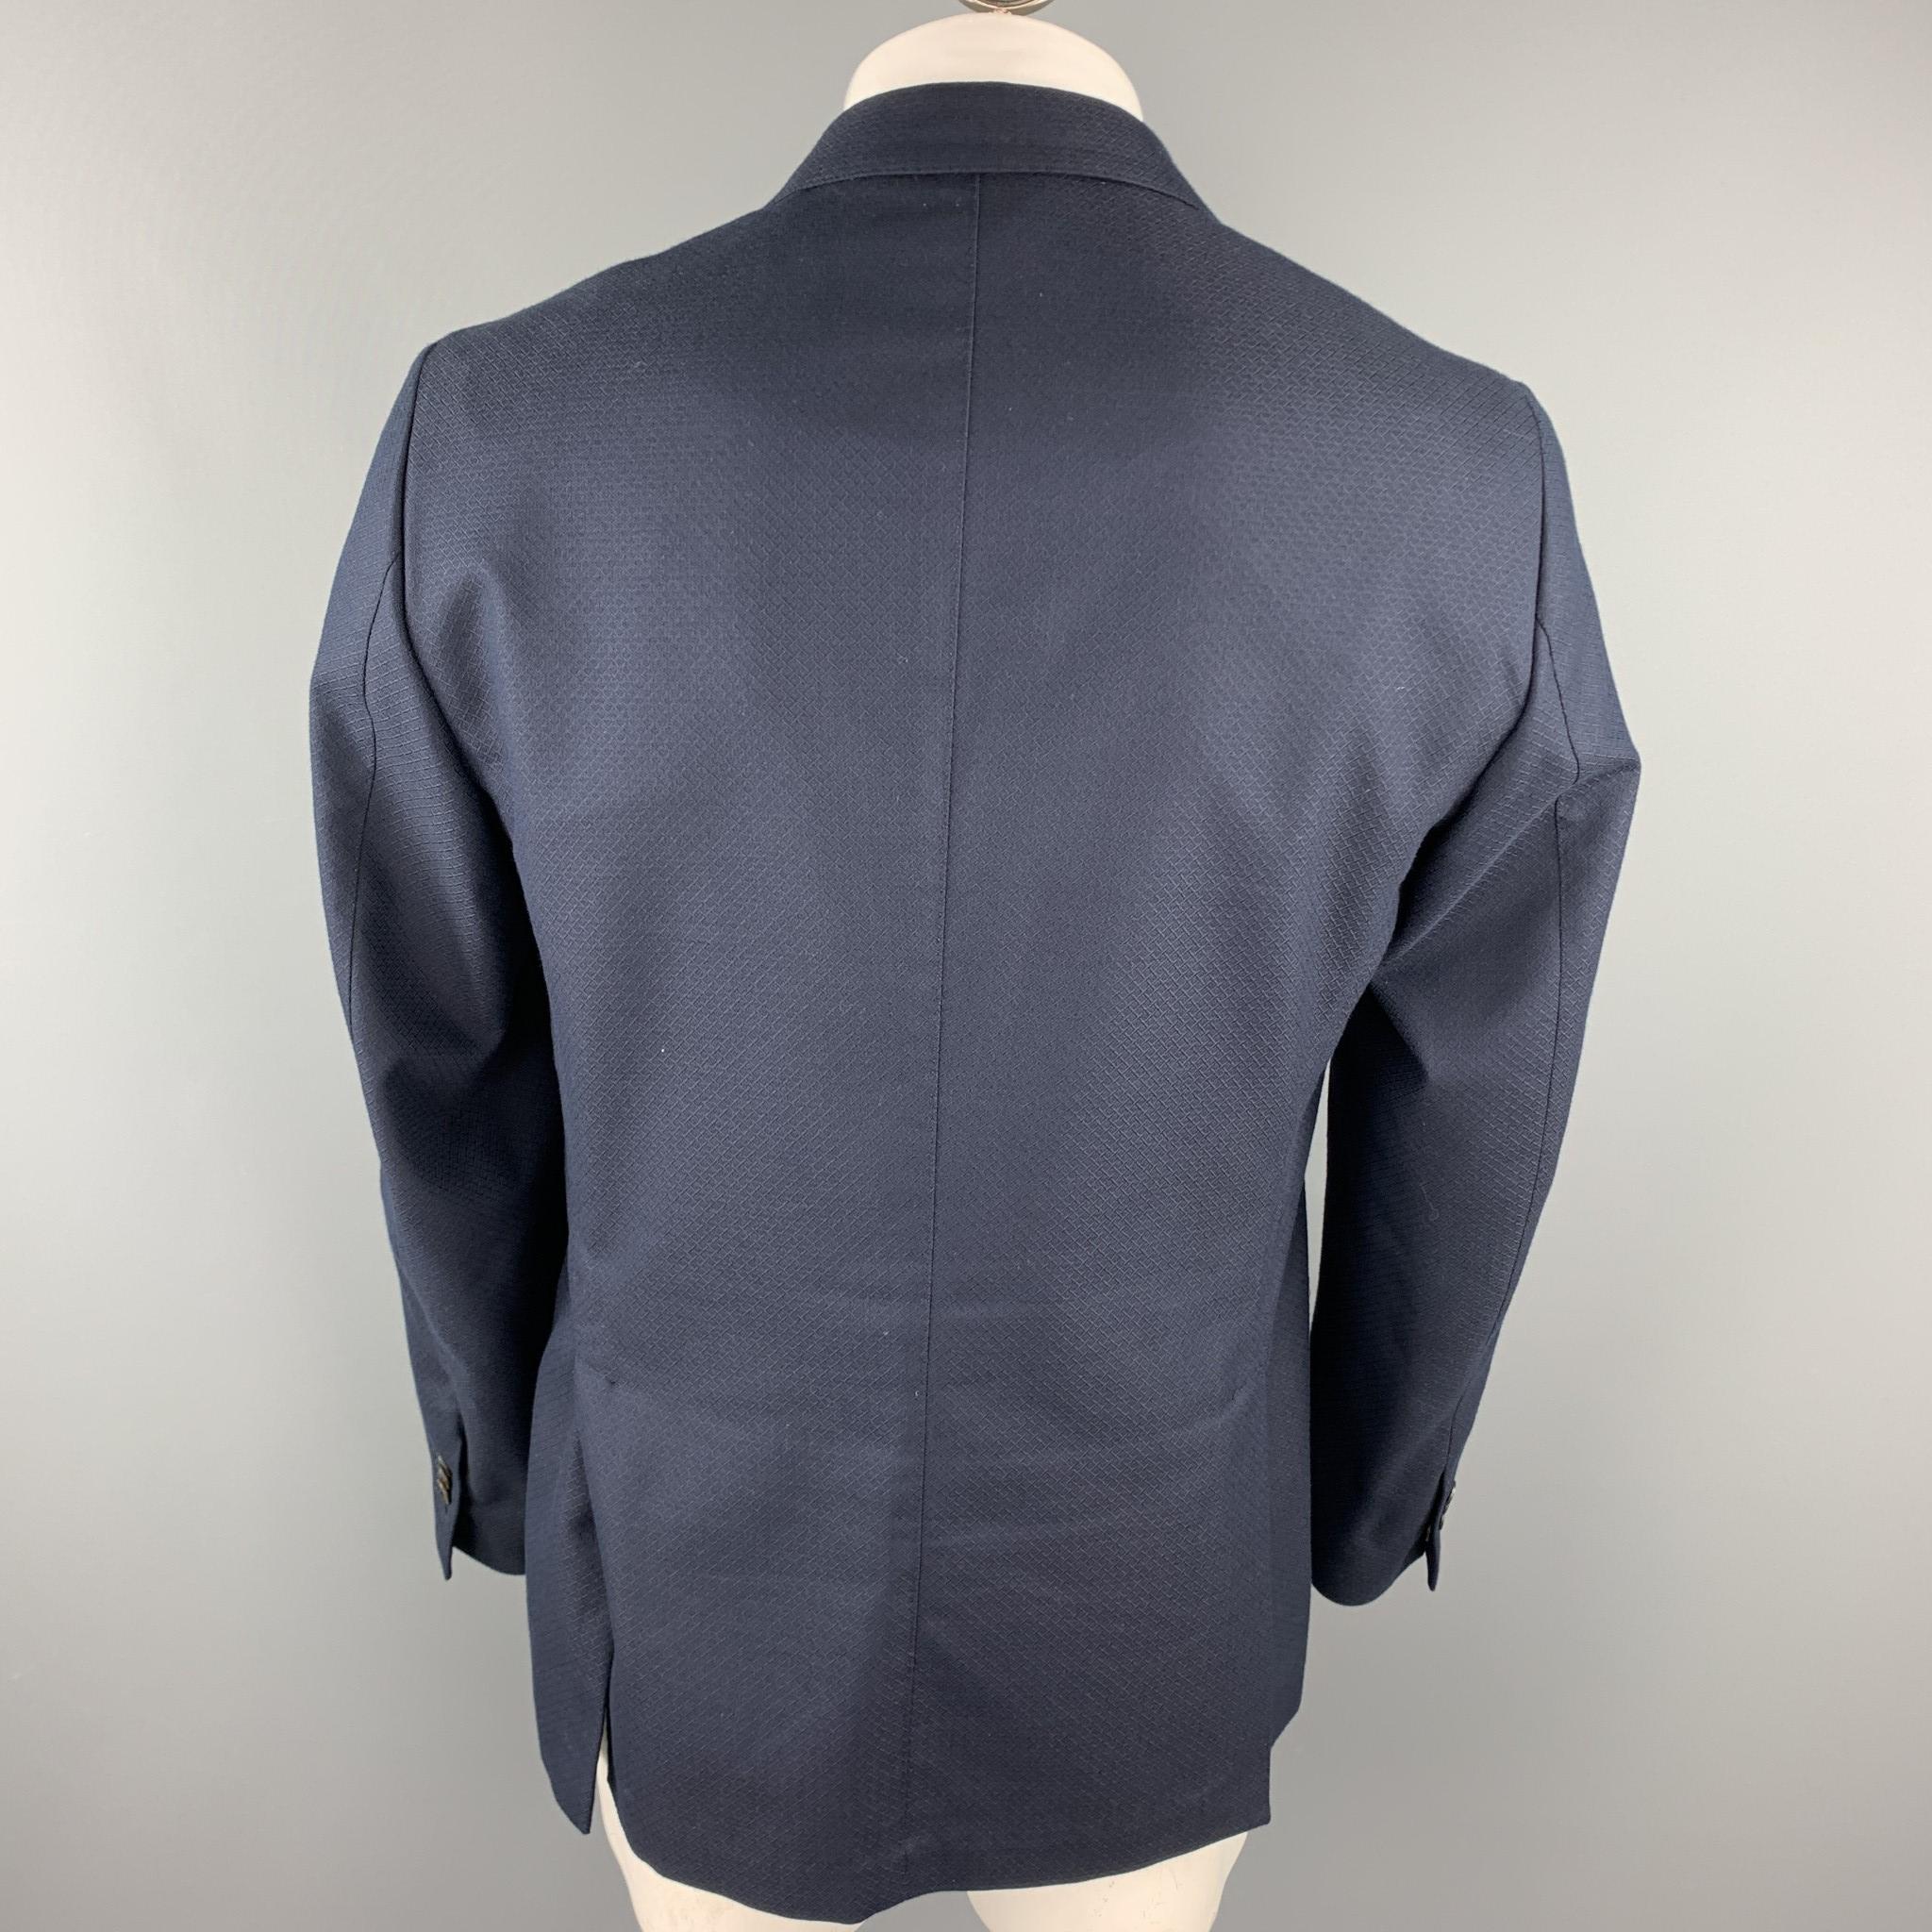 Black SAKS FIFTH AVENUE Chest Size 44 Navy Textured Cotton / Wool Sport Coat